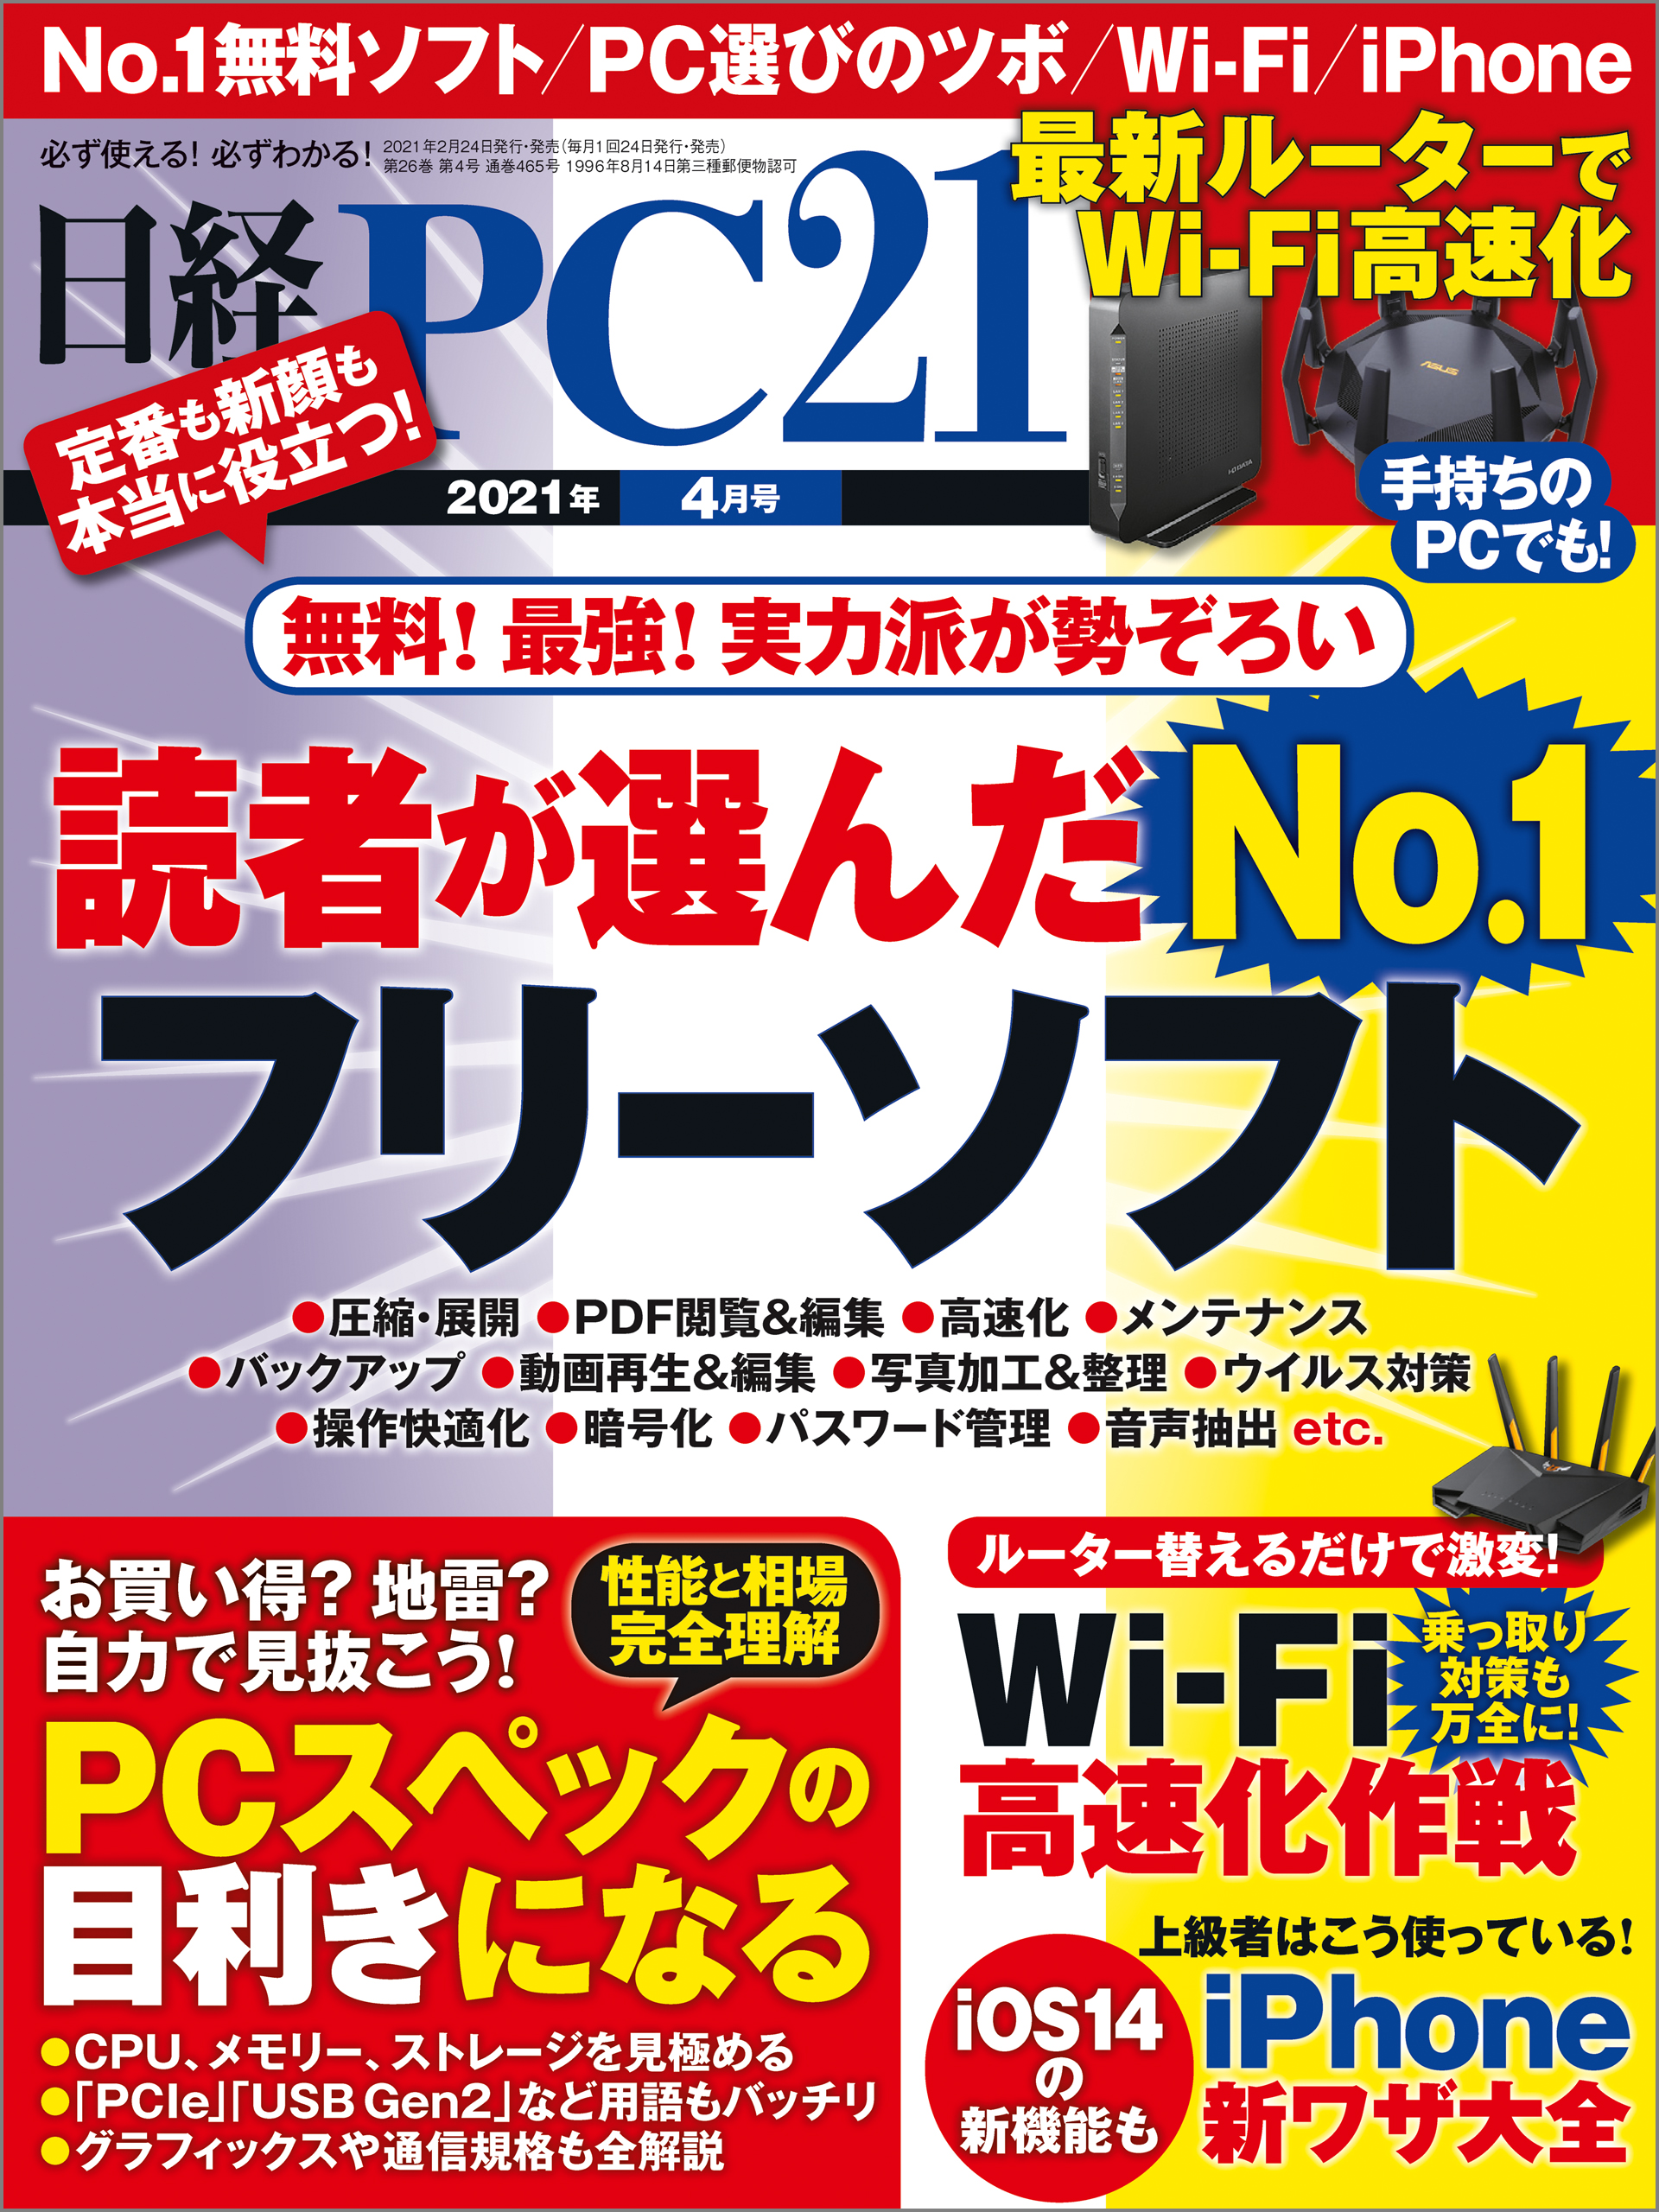 日経PC21 2021年4月号 - 日経PC21 - 漫画・ラノベ（小説）・無料試し